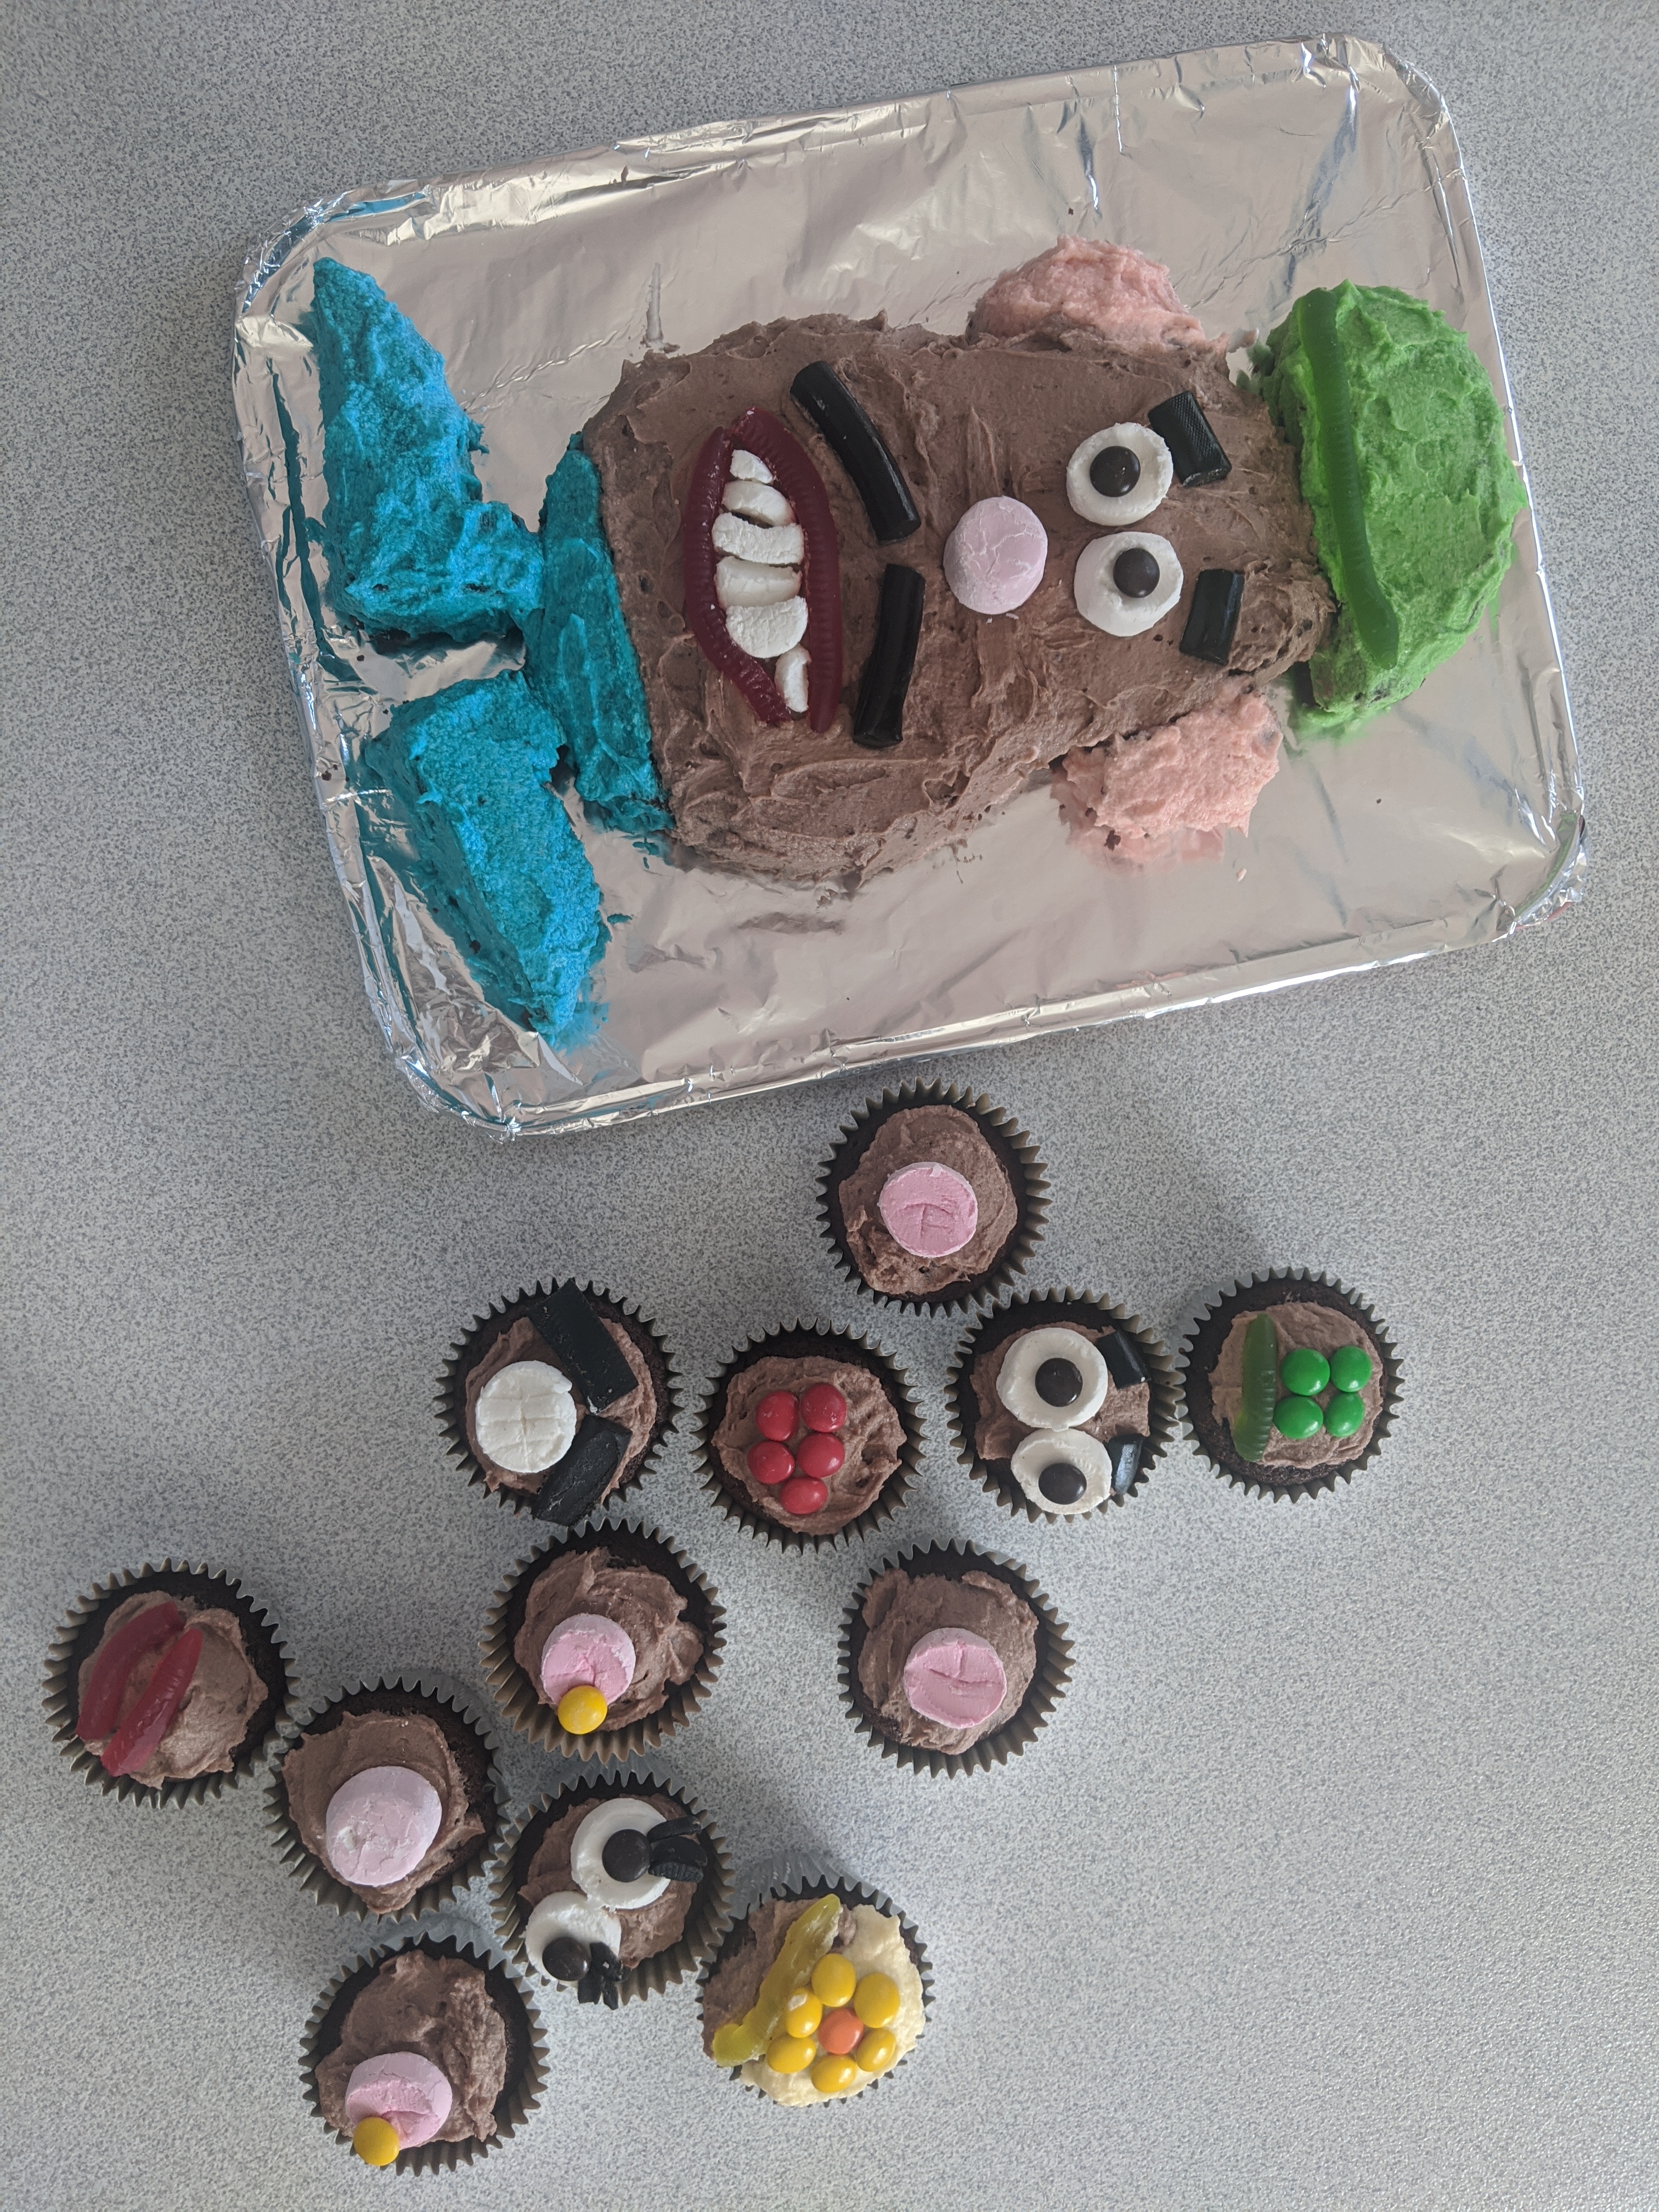 Mr Potato Head and Cupcakes